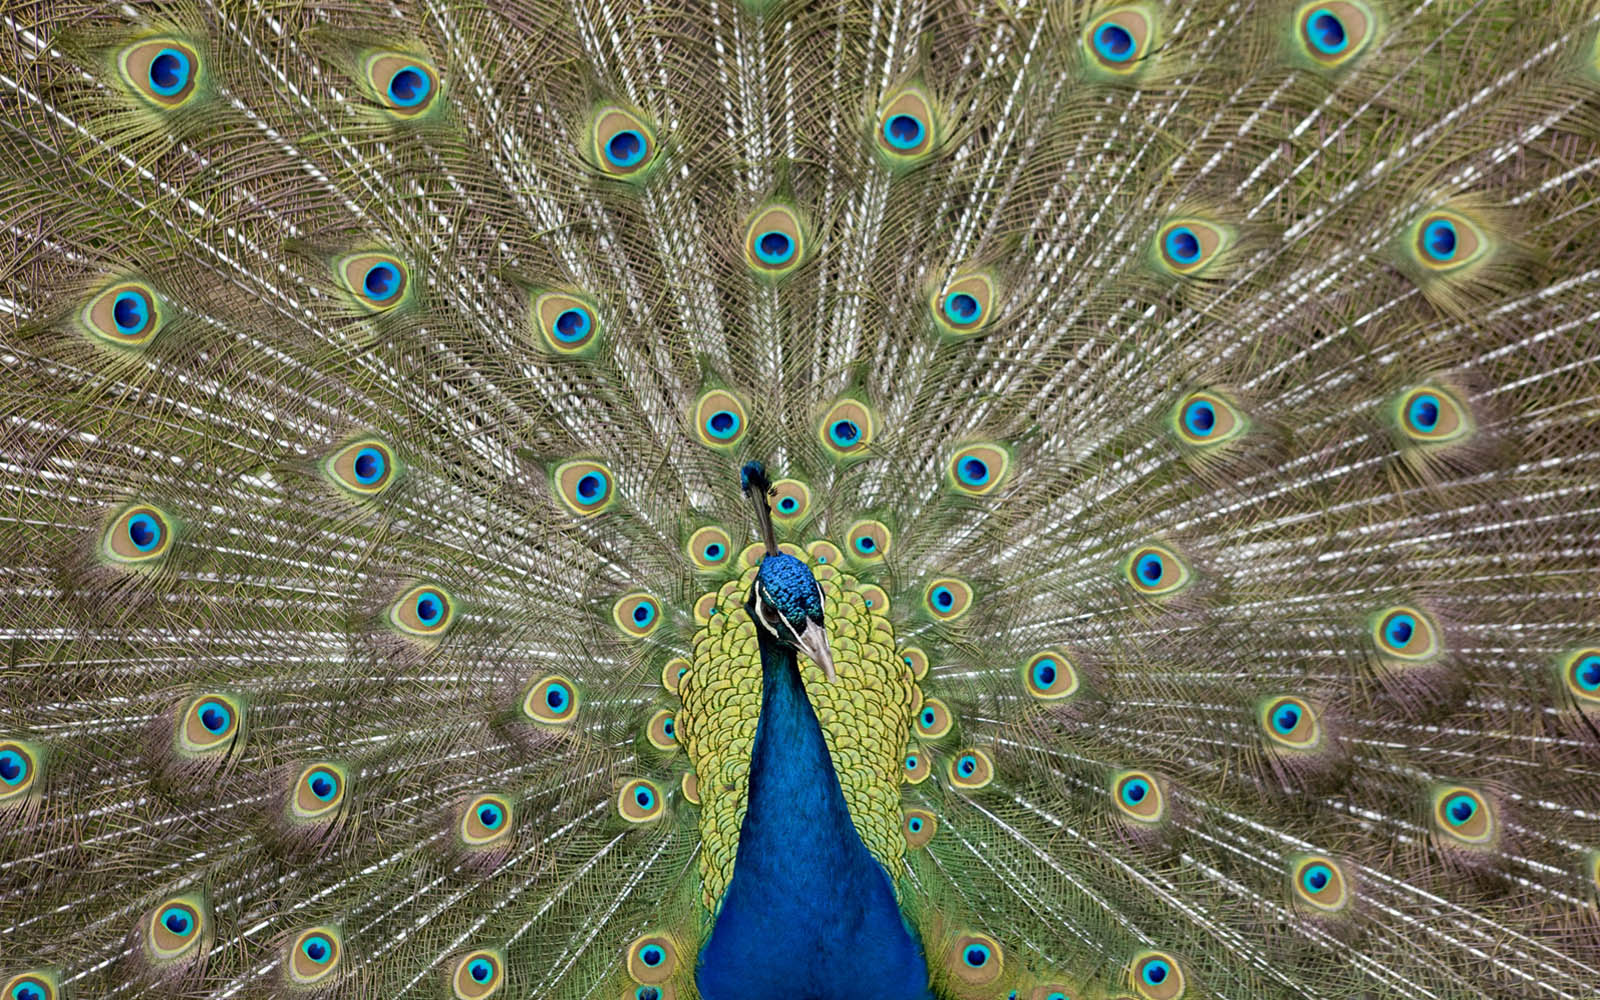 Keywords Peacock Wallpapers Peacock DesktopWallpapers Peacock